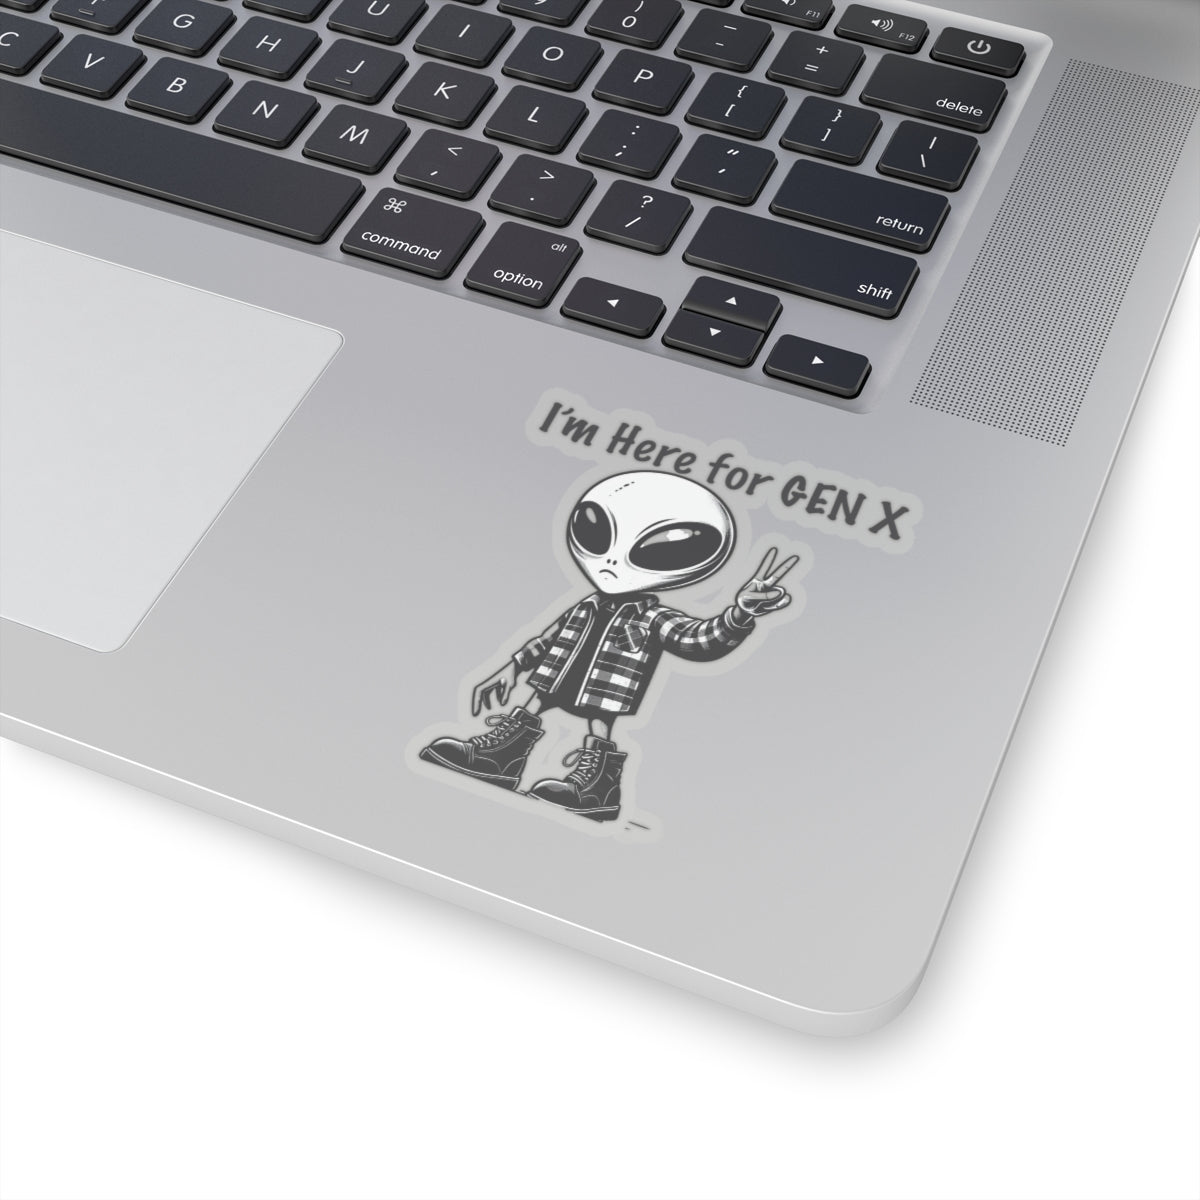 Gen X Alien ~ I'm here for Gen X large transparent sticker